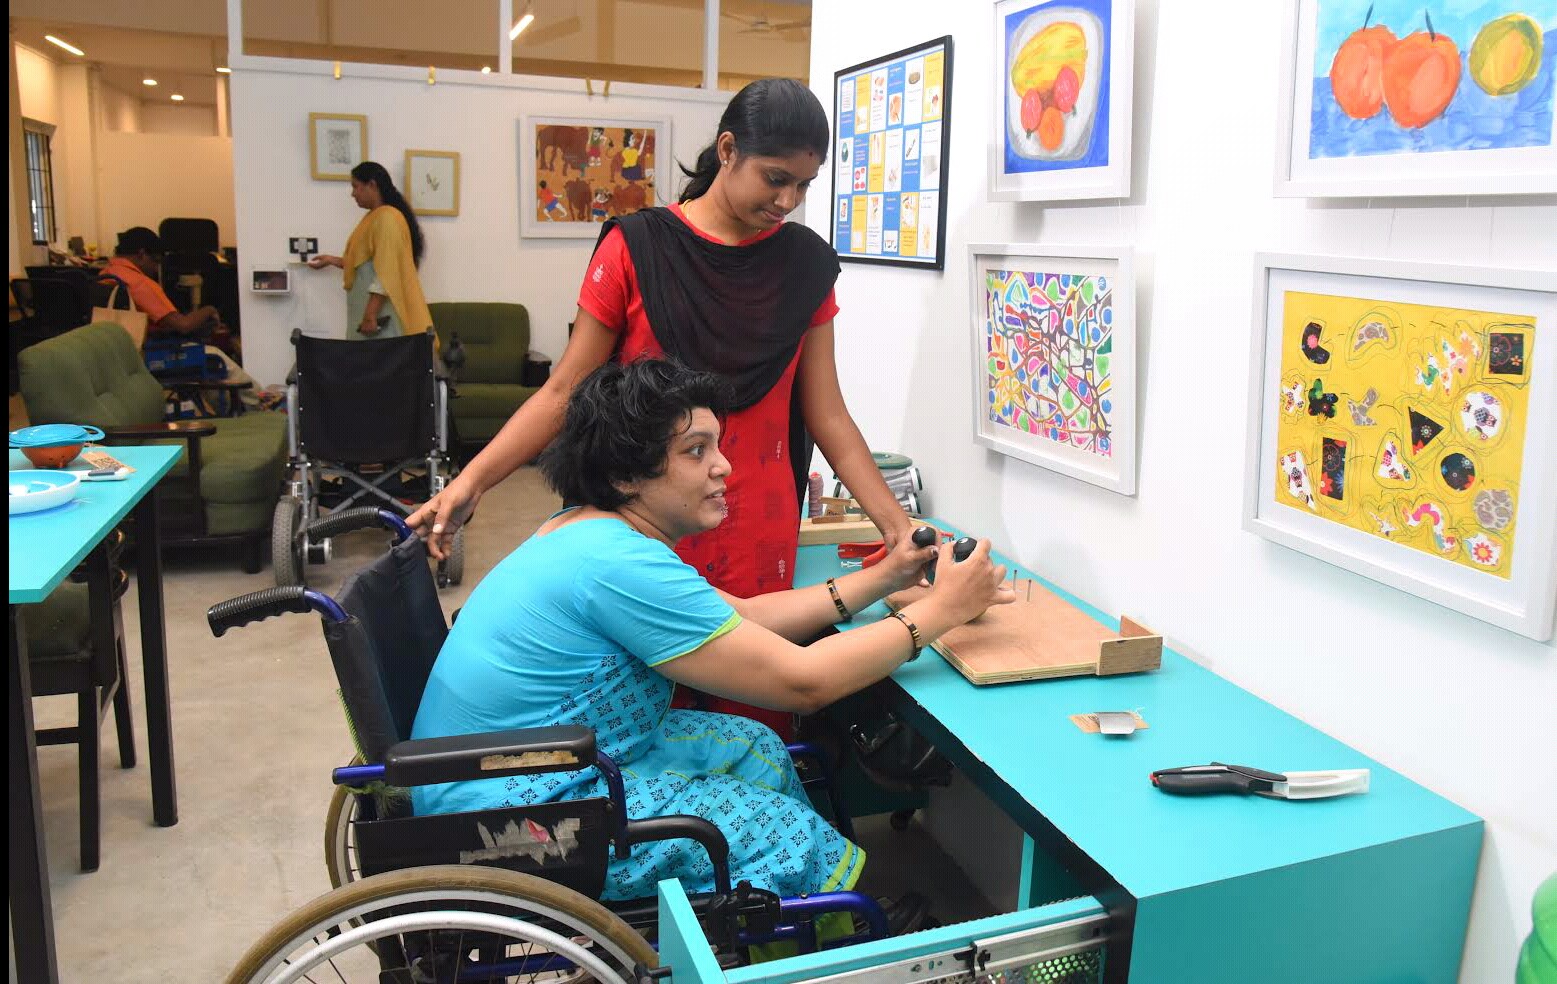 museum for disable persons in chennai  museum for disable persons  disable persons  handicap  museum foe handicap  மாற்றுத்திறனாளிகளுக்கான அருங்காட்சியகம்  அருங்காட்சியகம்  மாற்றுத்திறனாளிகள்  சென்னை மாற்றுத்திறனாளிகளுக்கான அருங்காட்சியகம்